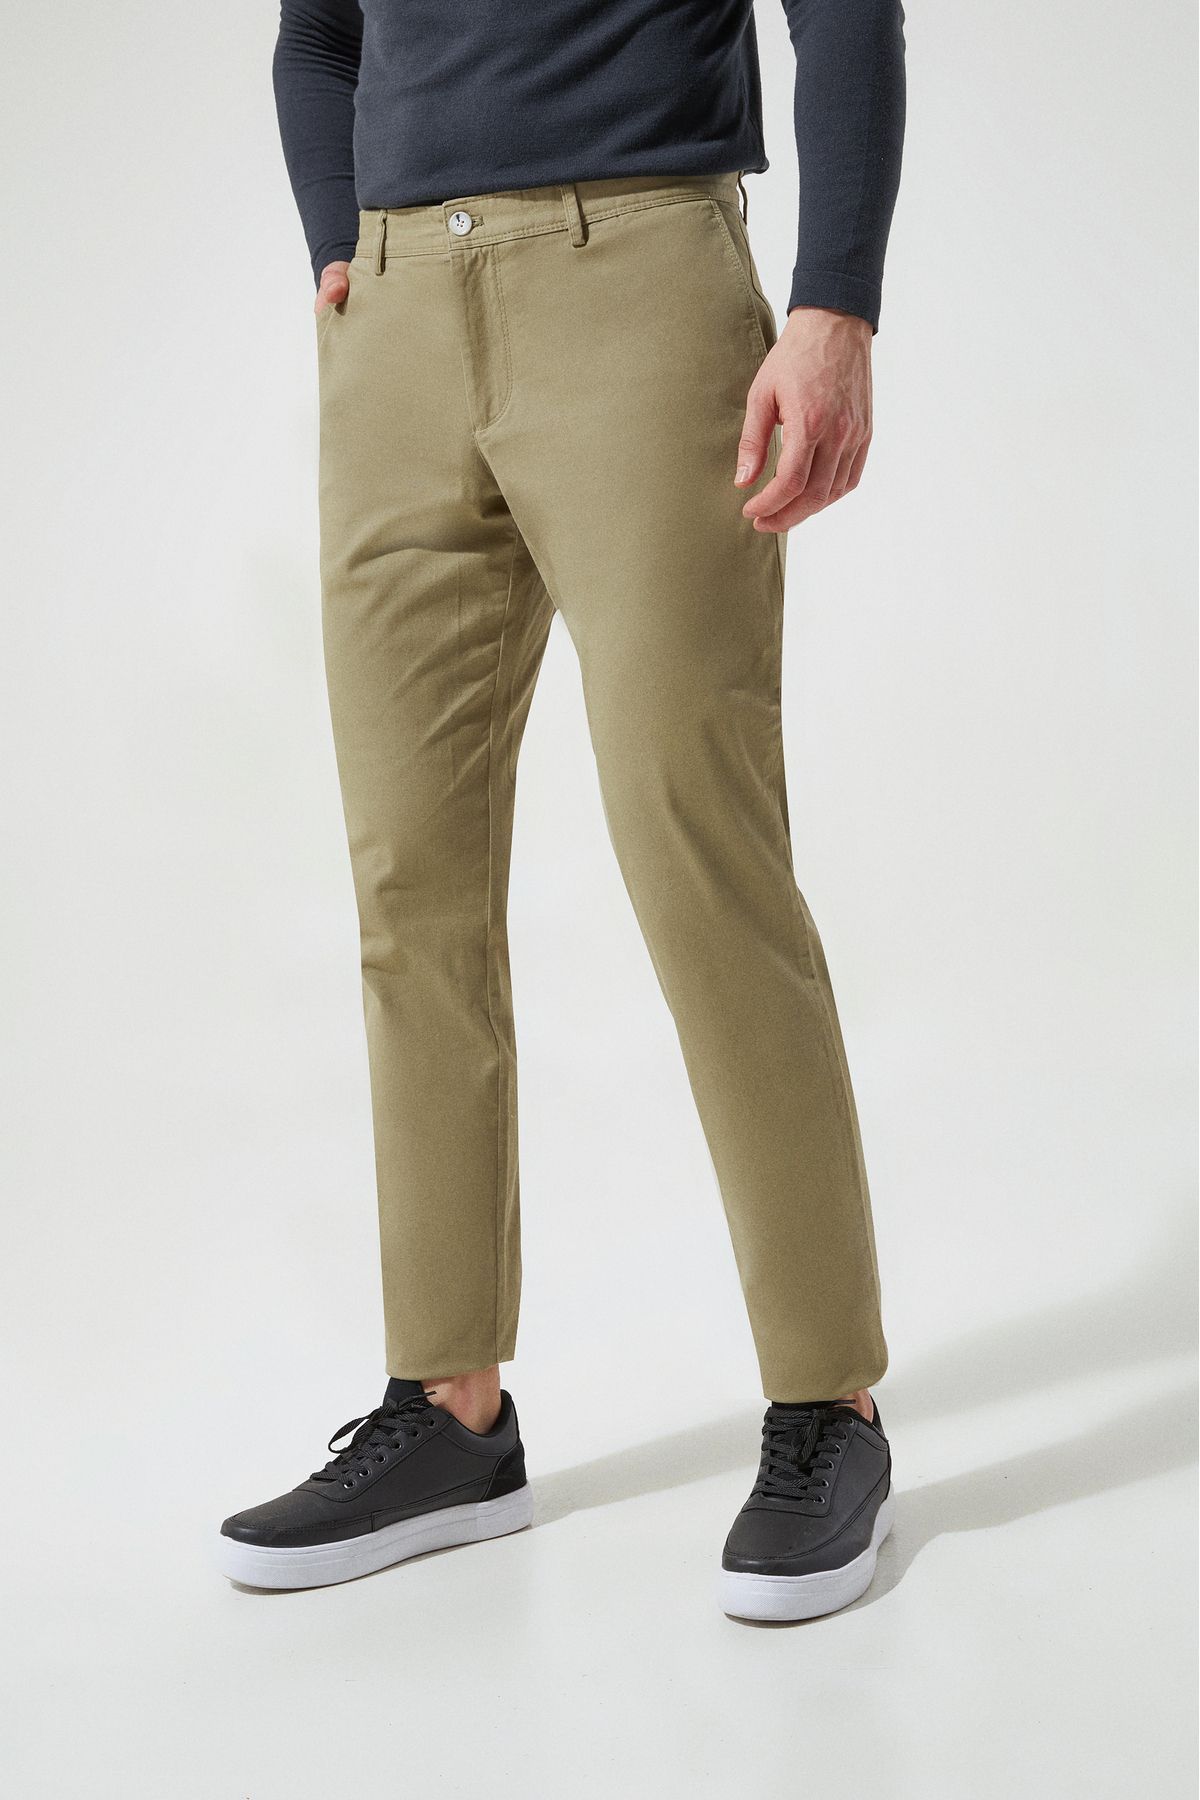 D'S Damat Regular Fit Yeşil Düz Chino Pantolon